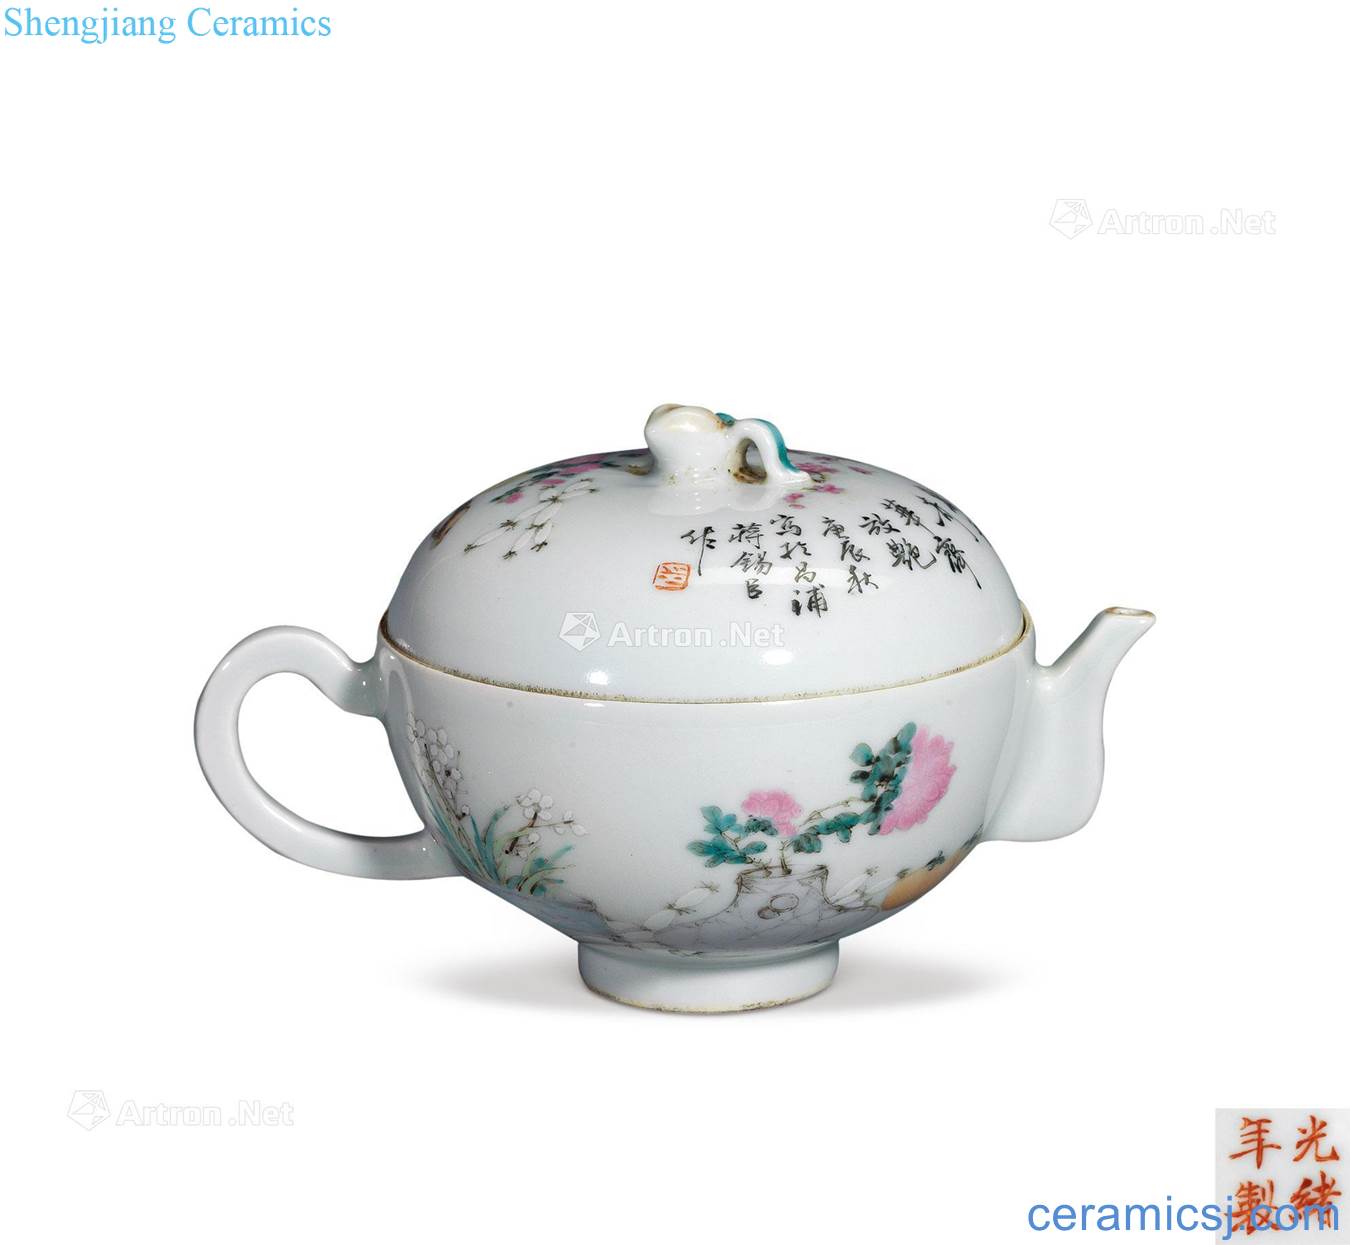 Guangxu shallow purple color flower poetry teapot